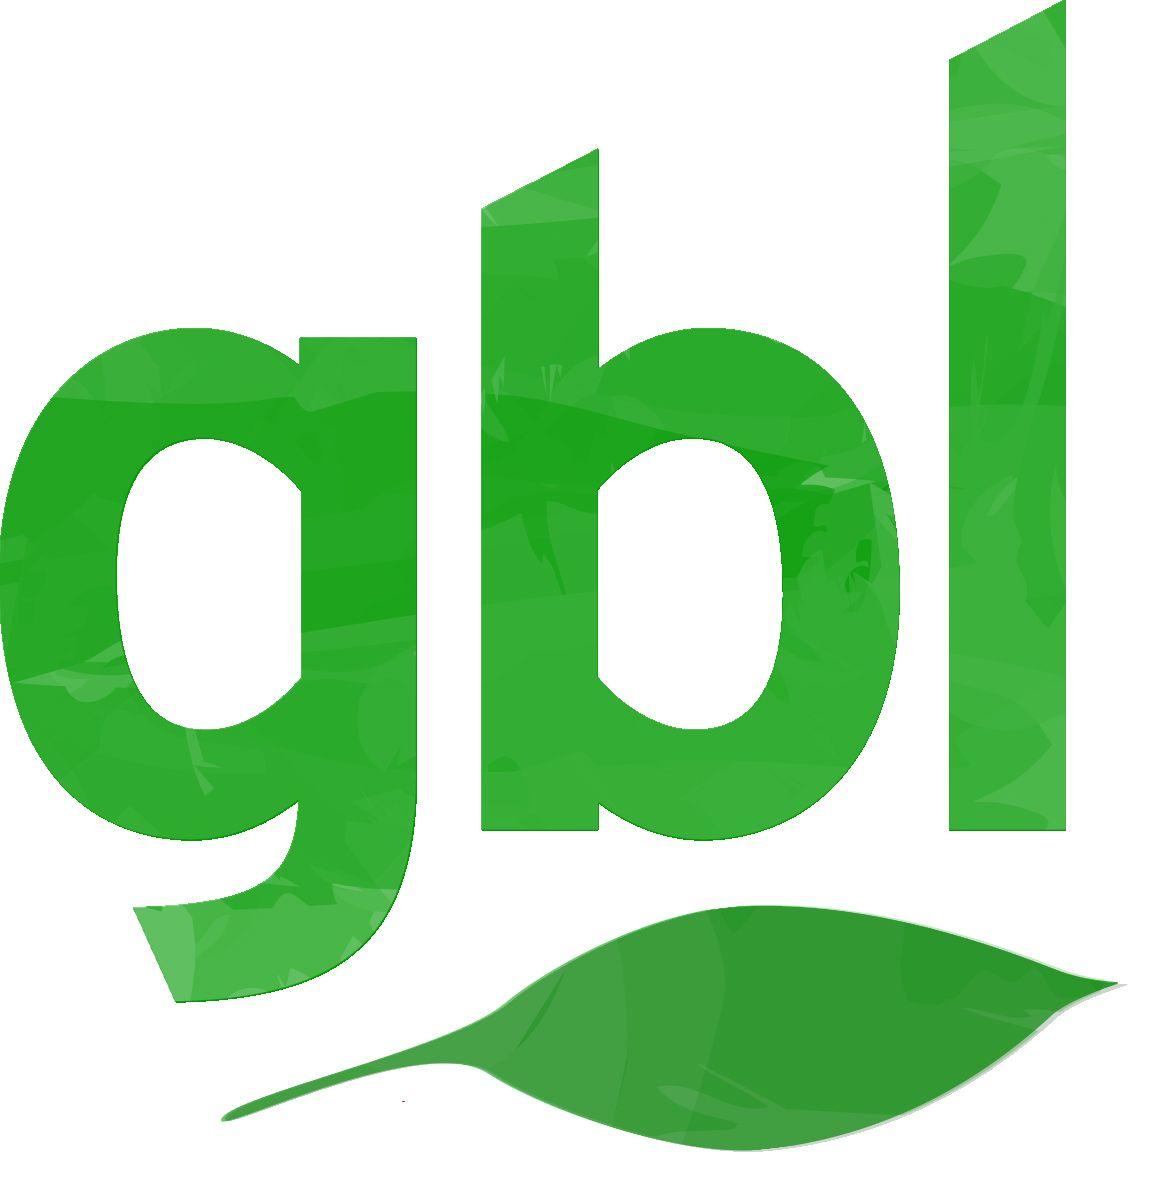 GBL Logo - Gbl Green Benefits, Ltd